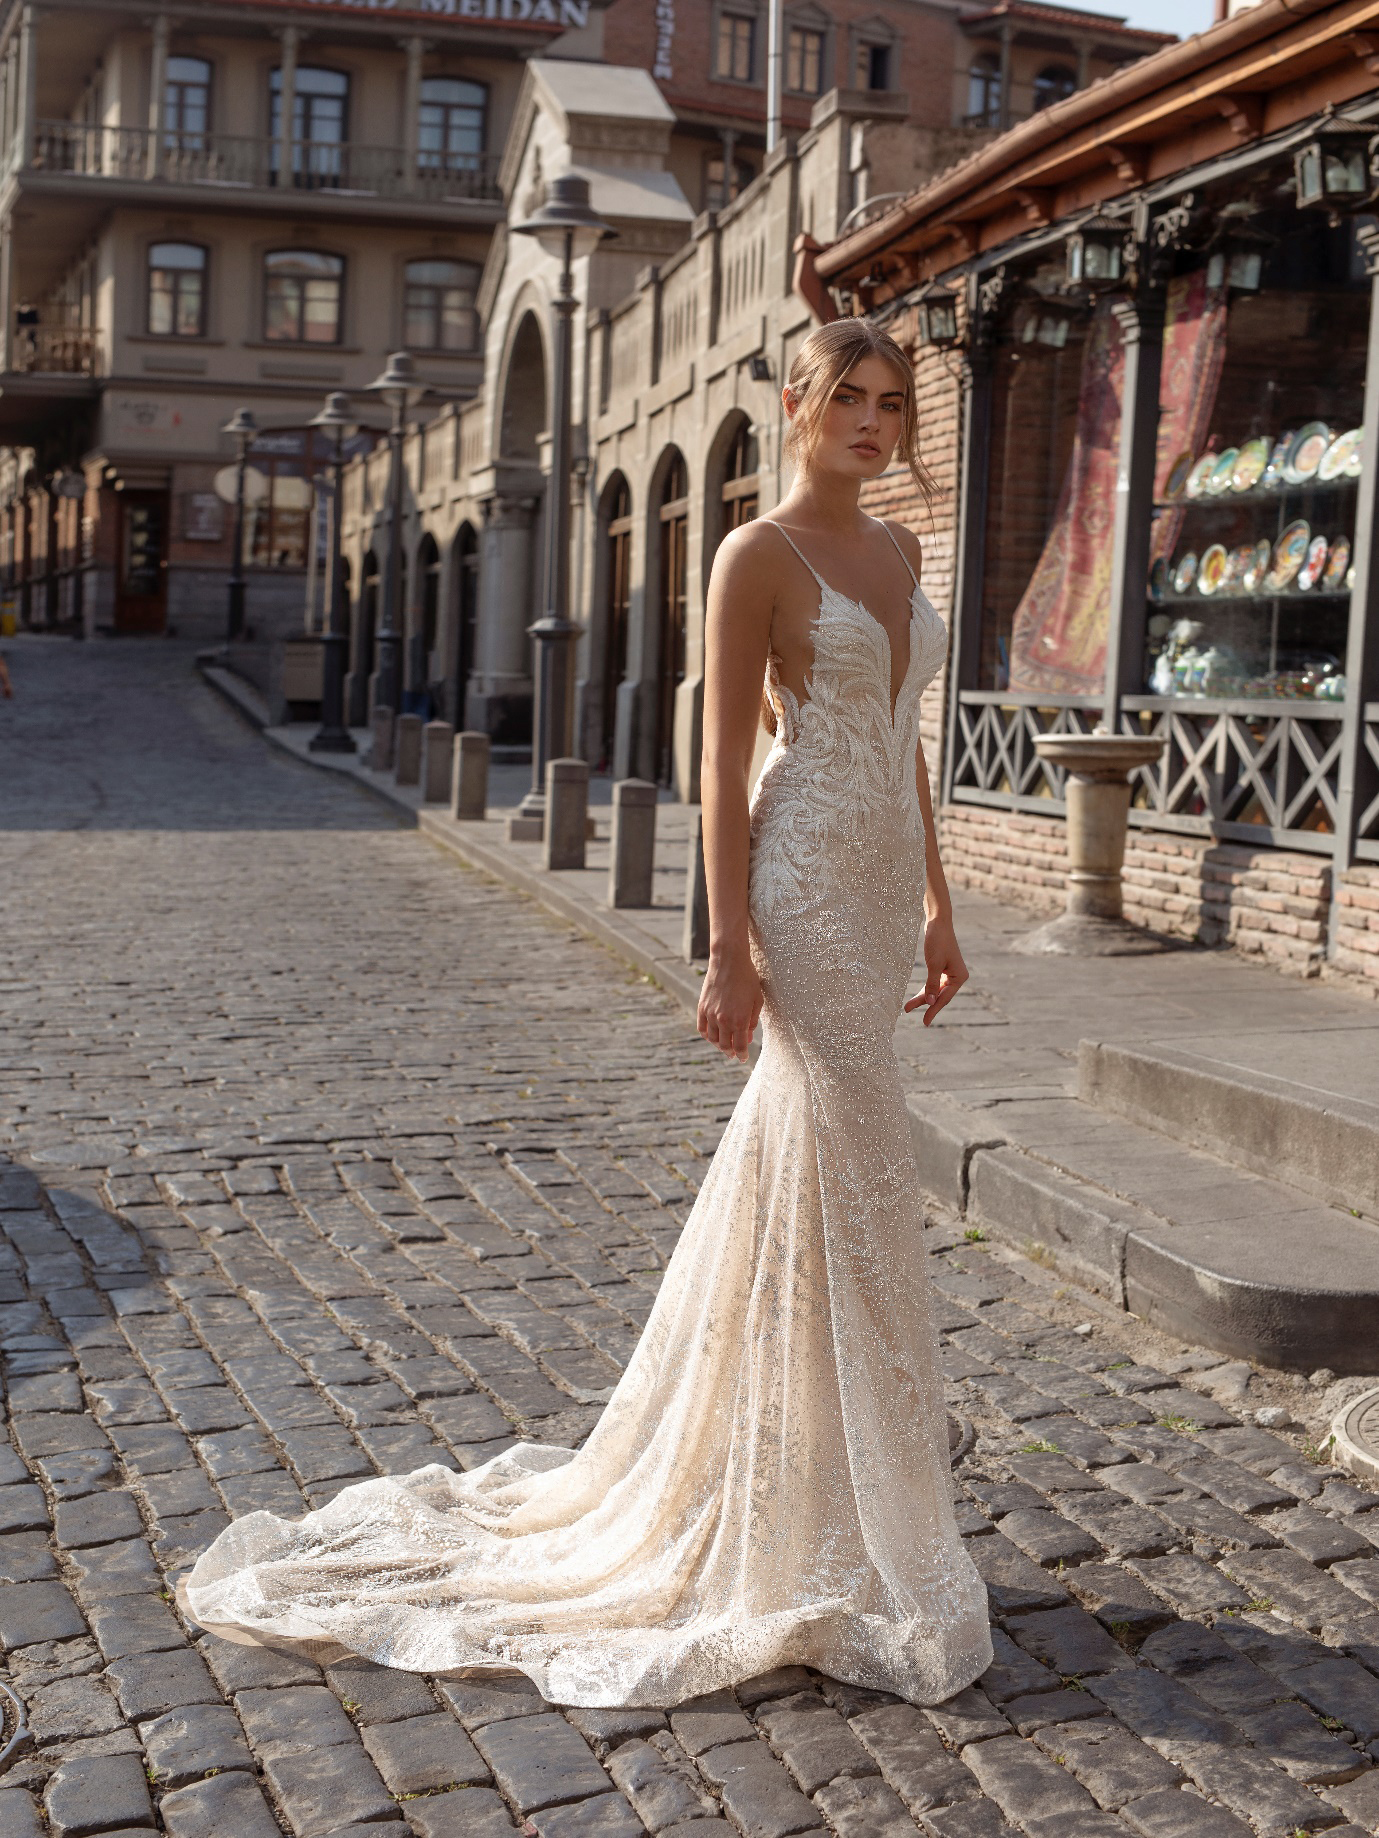 sexy wedding dress in the street